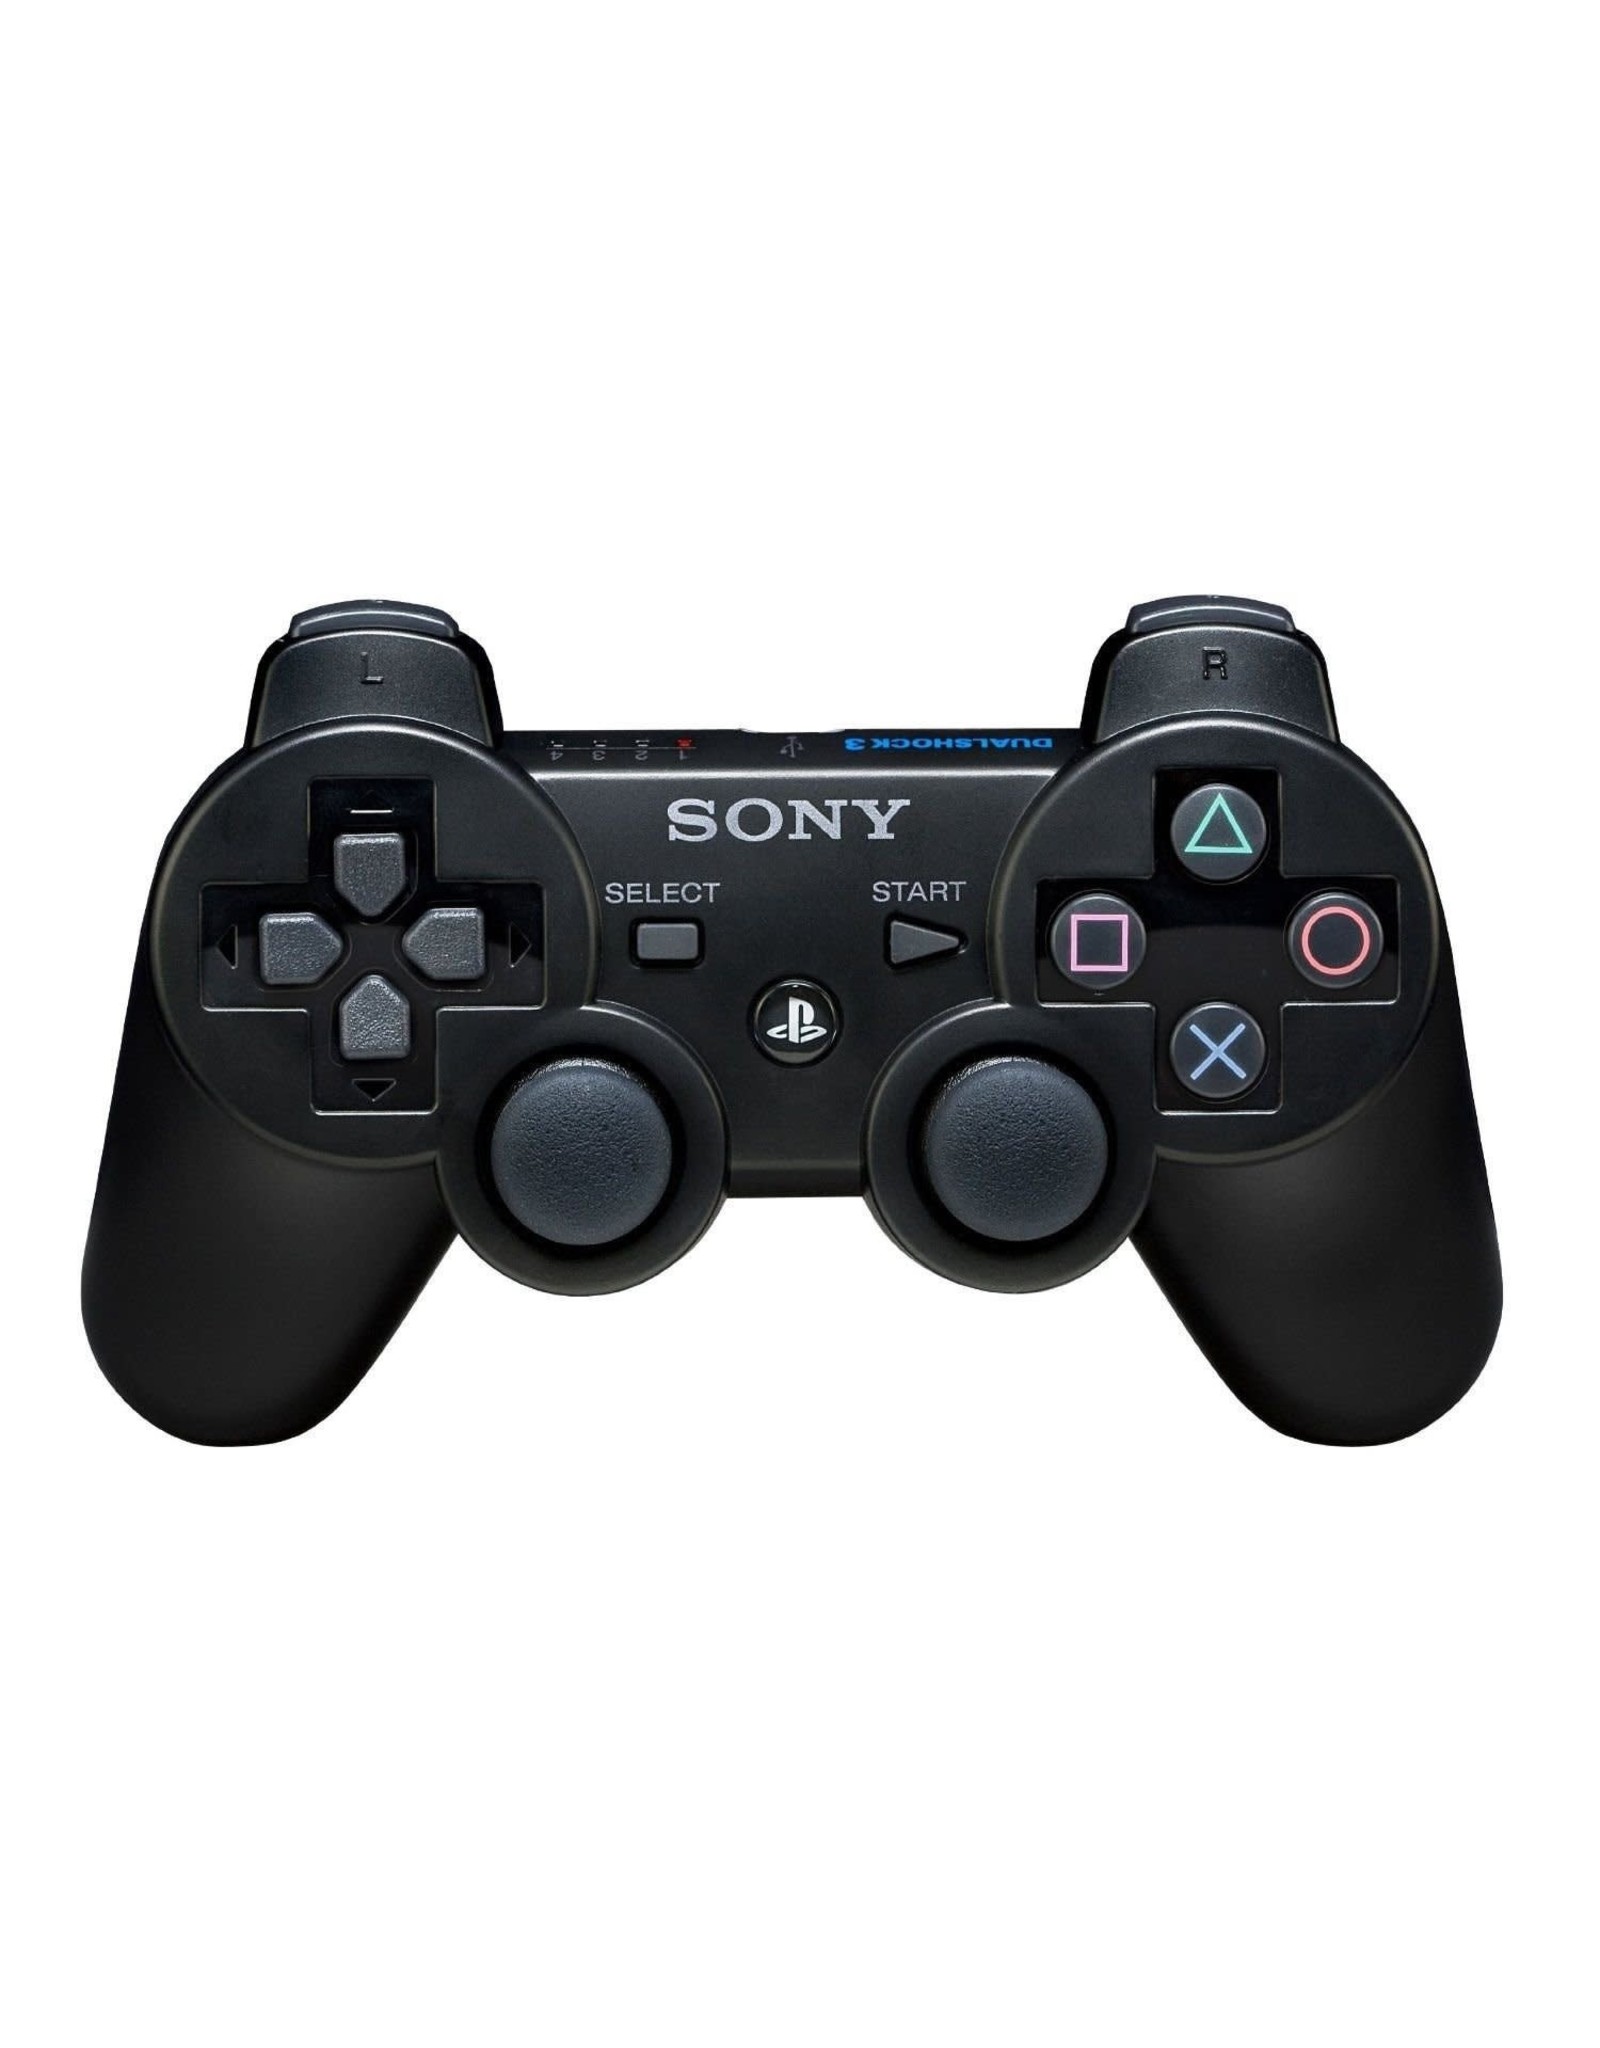 Playstation 3 PS3 Playstation 3 Dualshock 3 Controller - Black (Used)